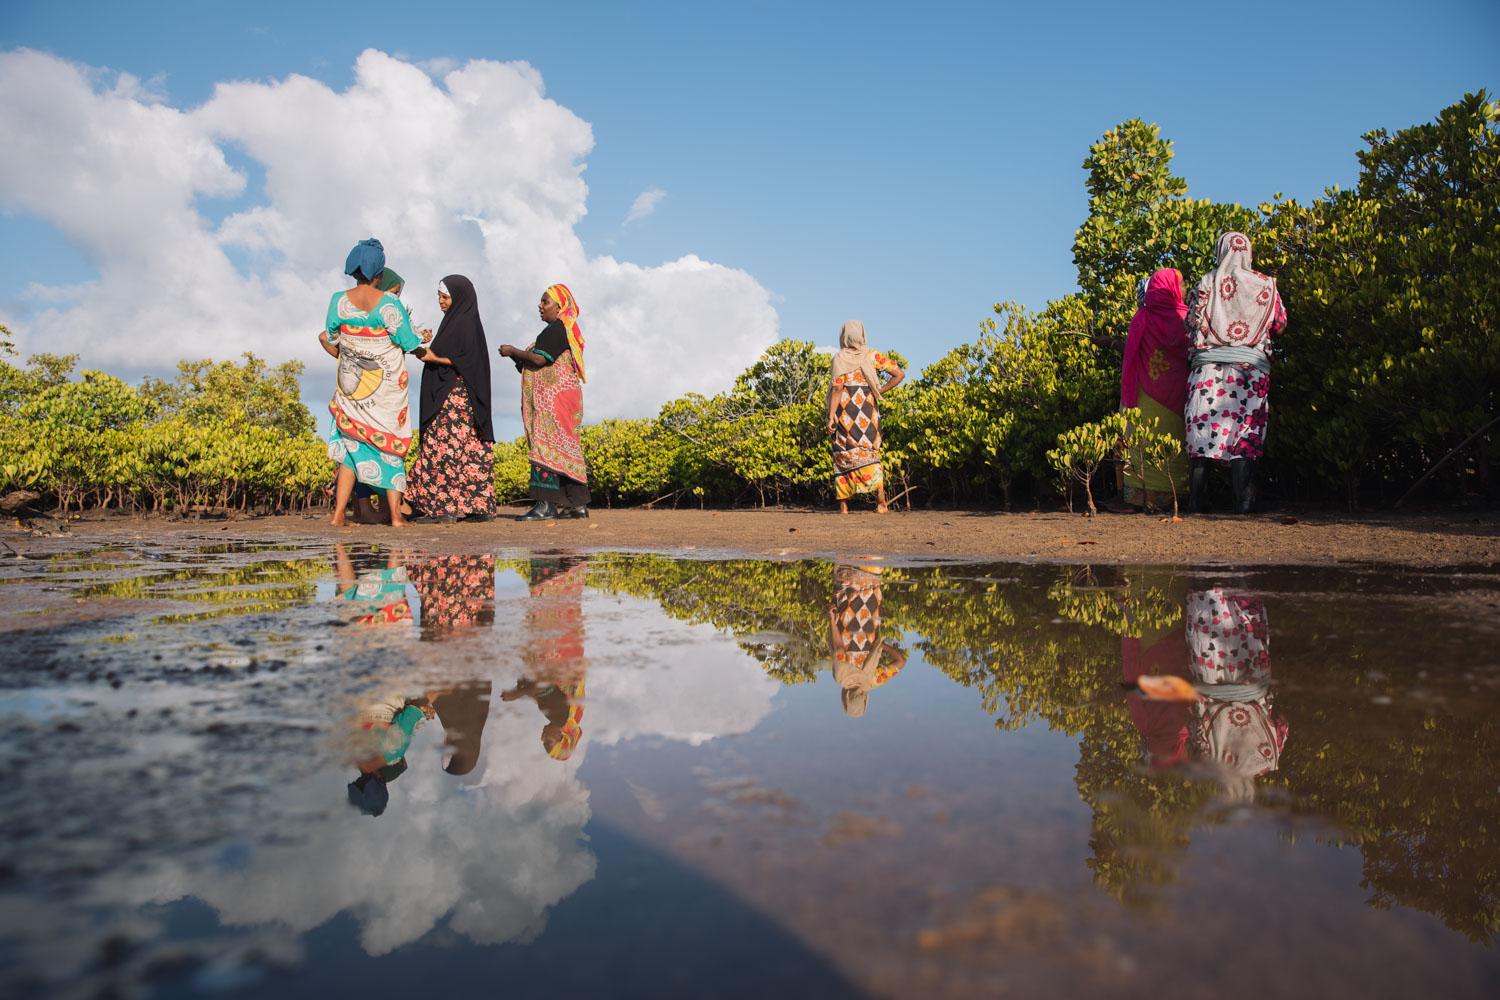 The women look for propagules from the mangrove trees at the Mangrove restoration site in Mtangawanda, Lamu, while others chat. Lamu Kenya